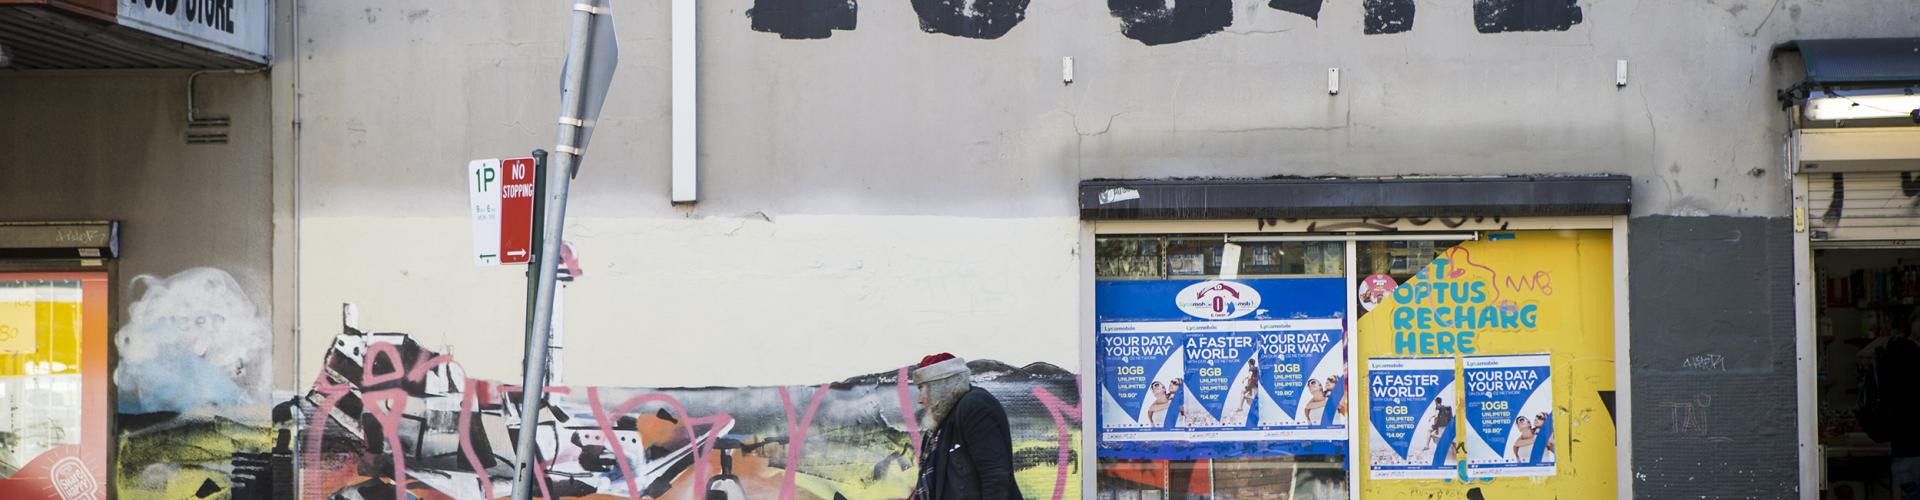 A colour photograph of a man wearing an old santa hat walking down a grafitied urban street. 